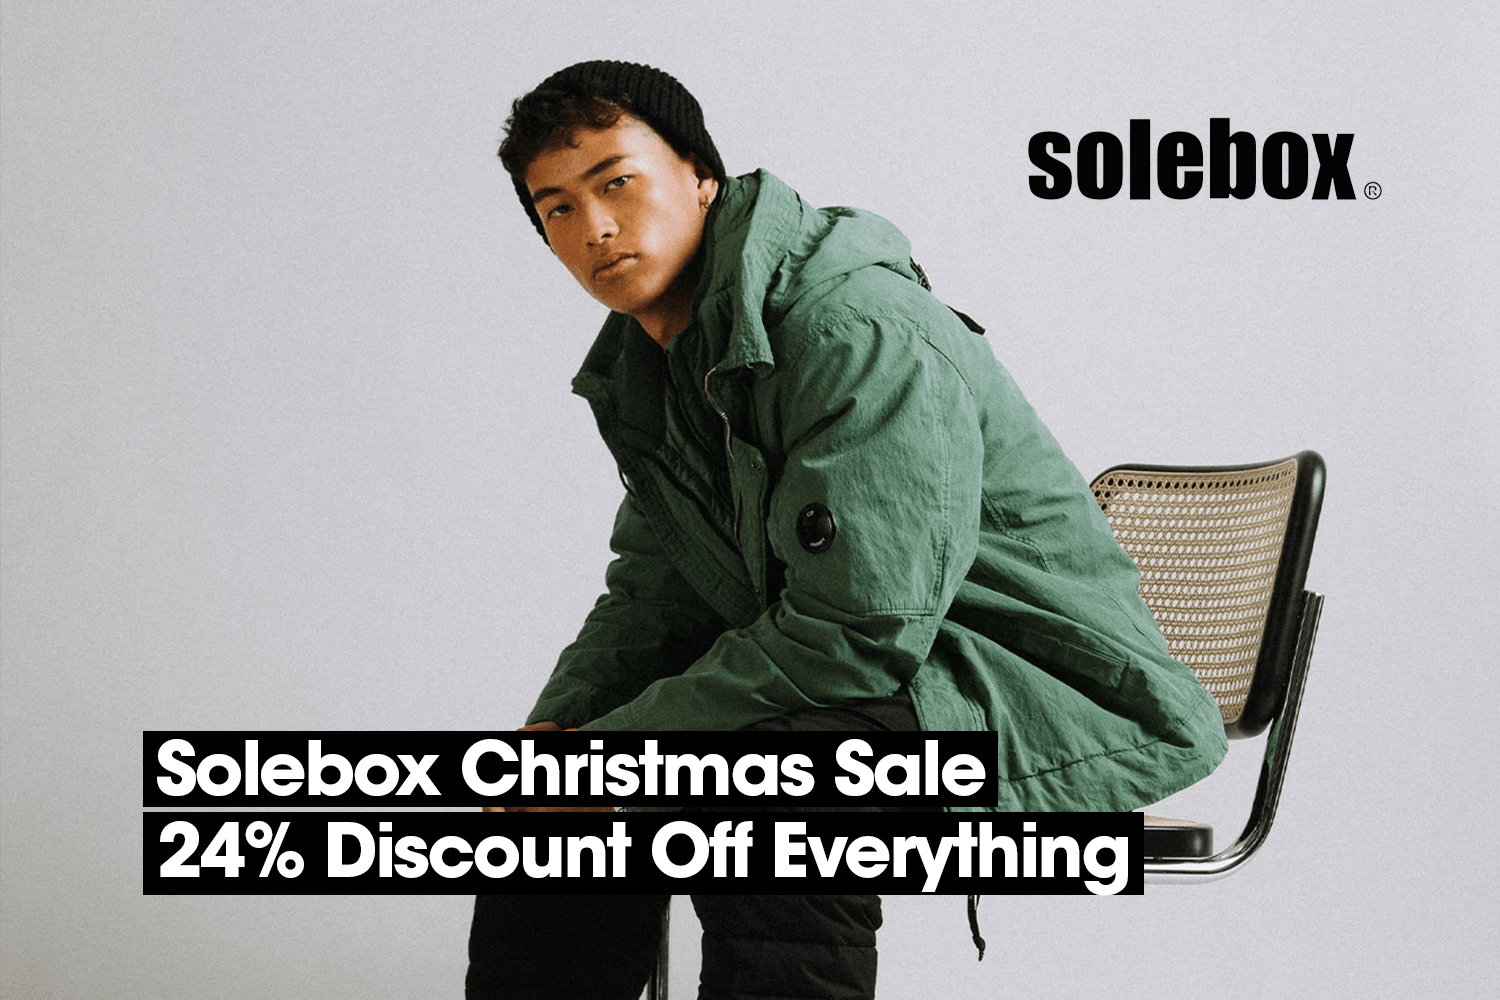 Onze favoriete items uit de Solebox Christmas Sale